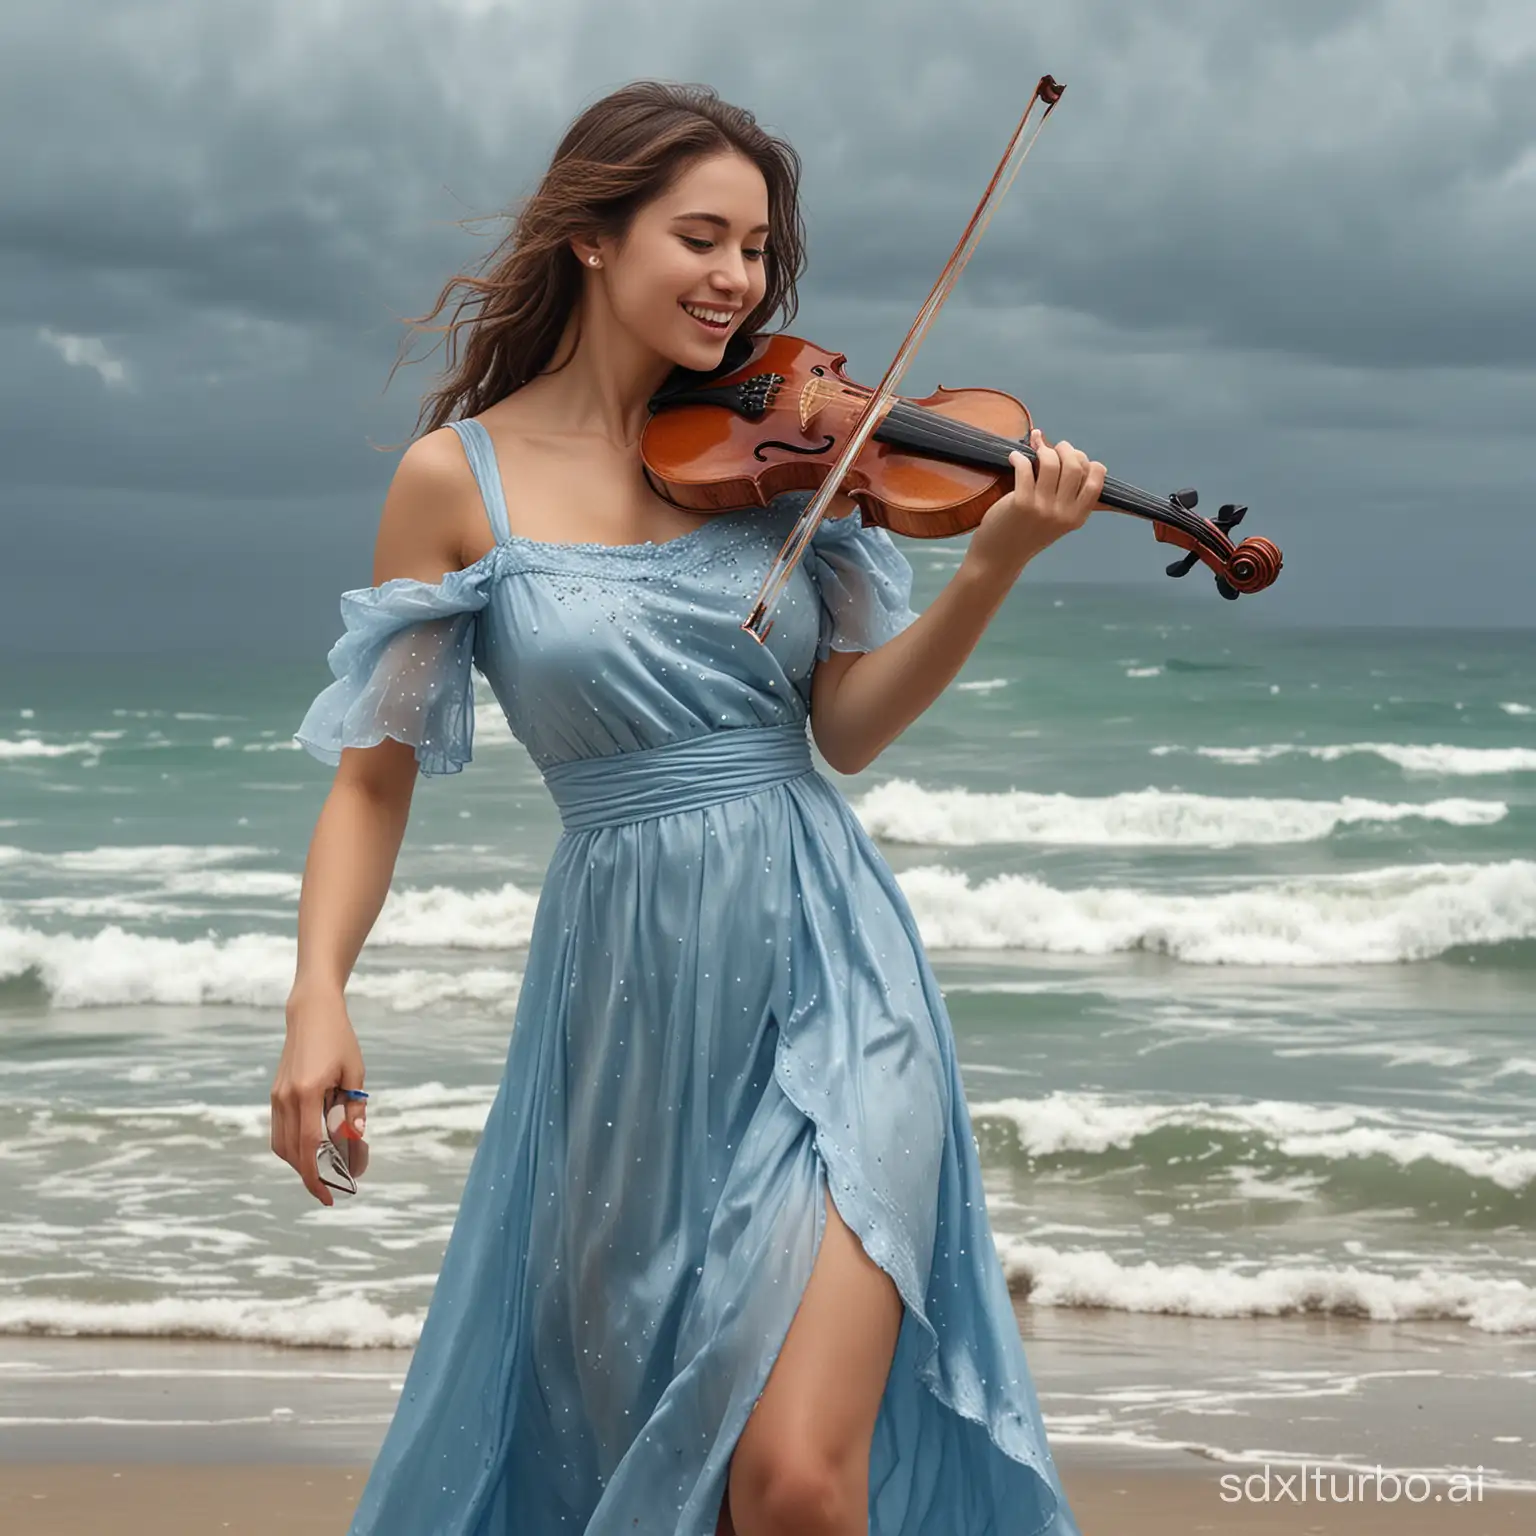 Elegant-Woman-Playing-Violin-on-Beach-in-Shimmery-Blue-Dress